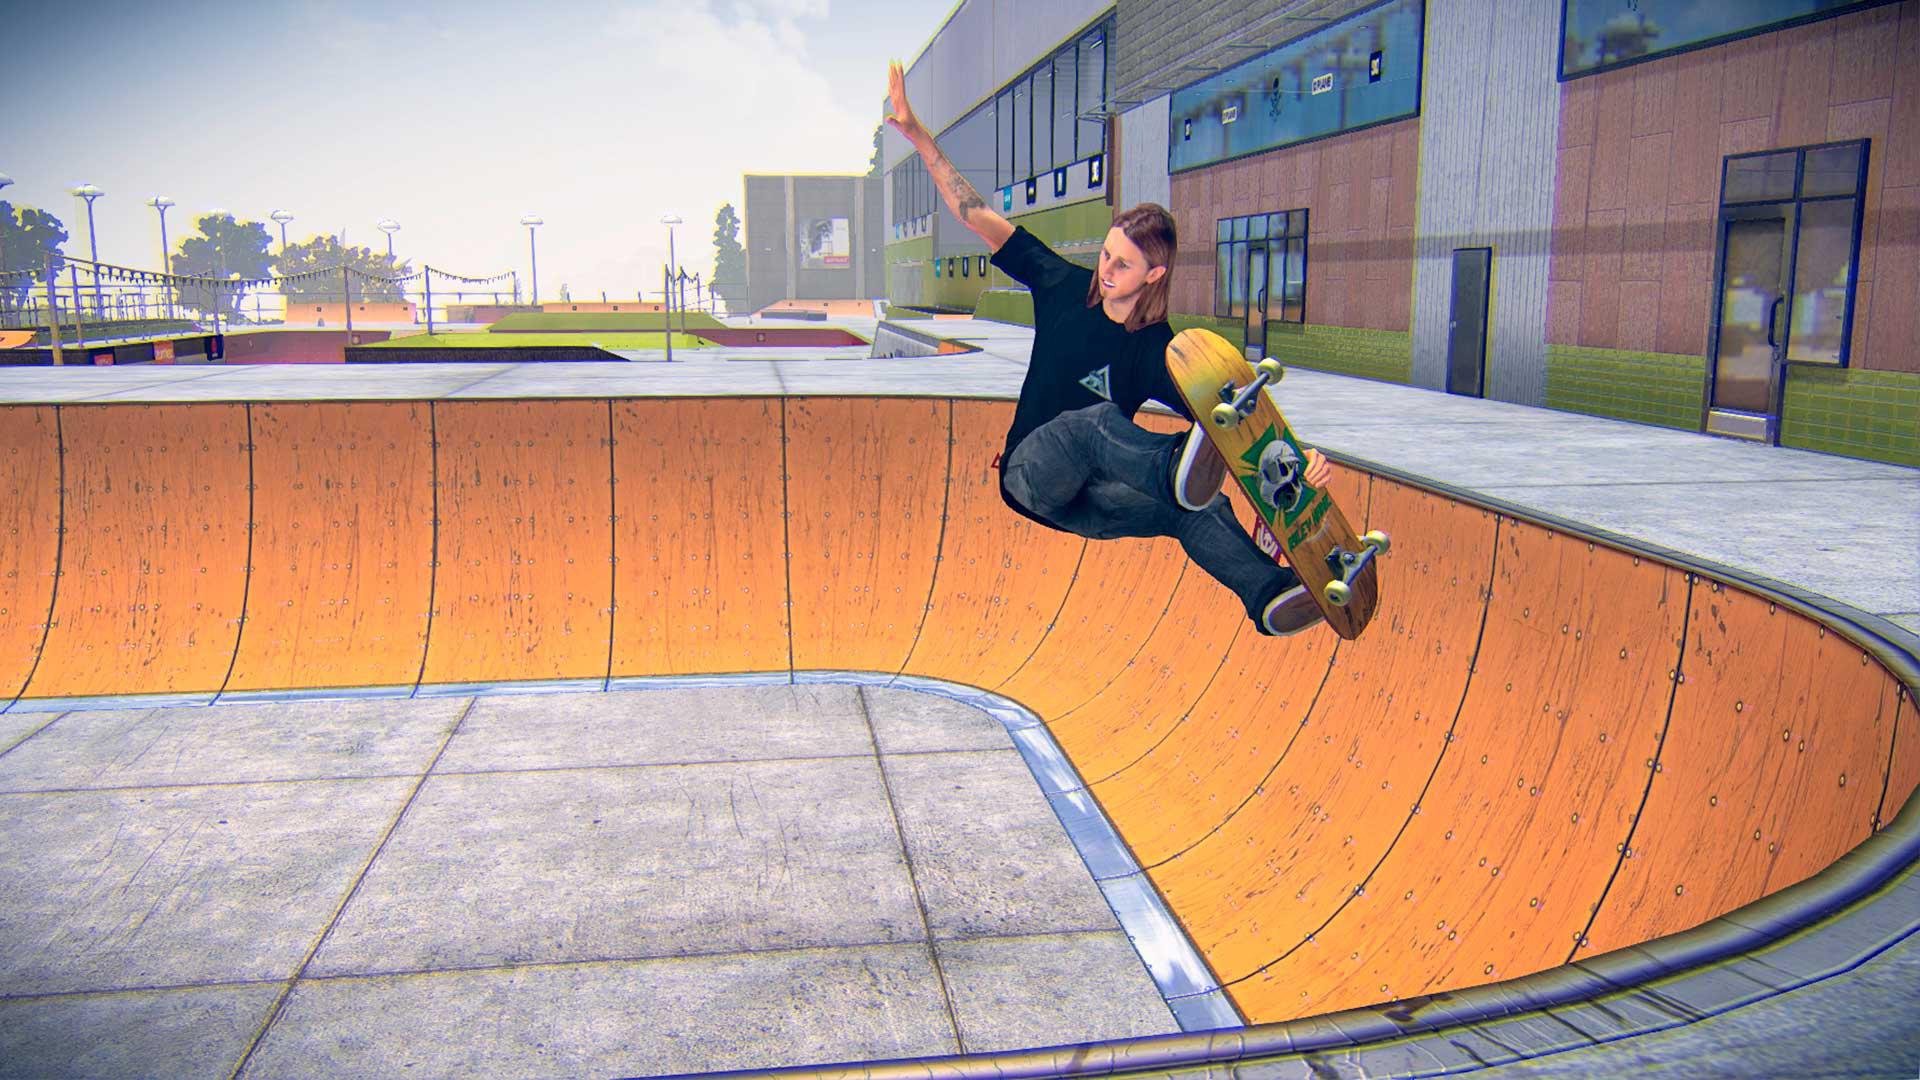 Tony Hawk Pro Skater Documentary Seeks Funding Through Indiegogo